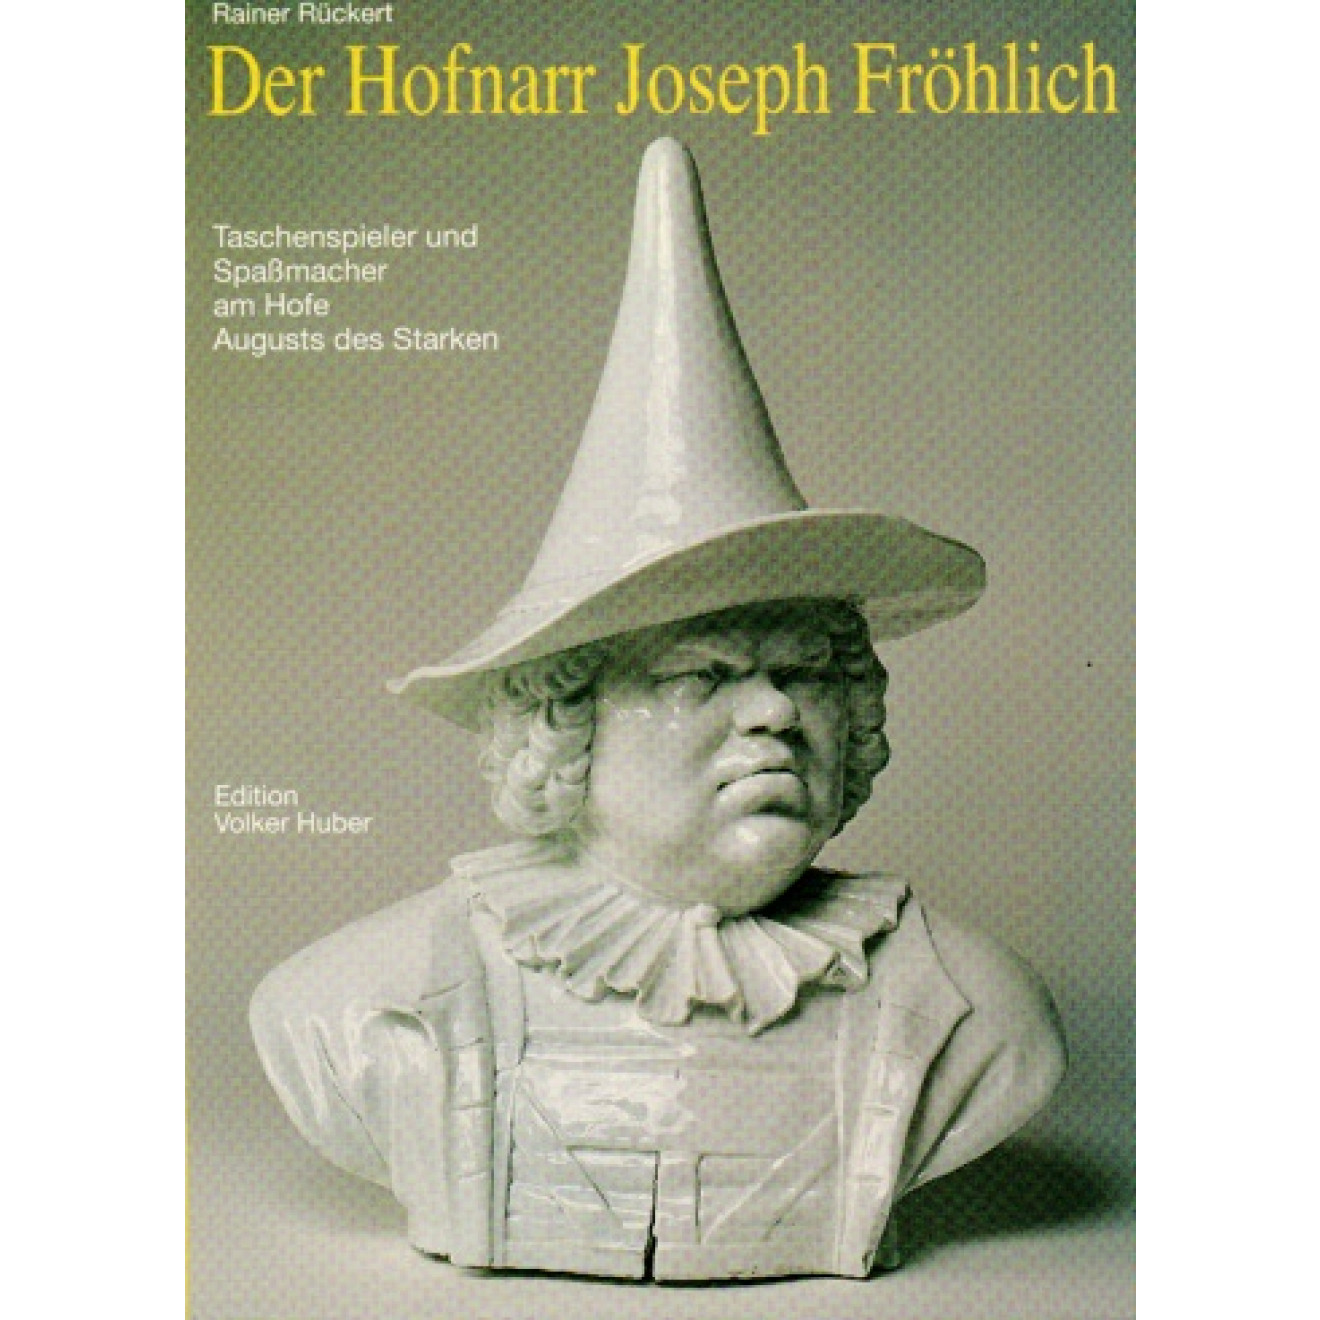 Der Hofnarr Joseph Fröhlich